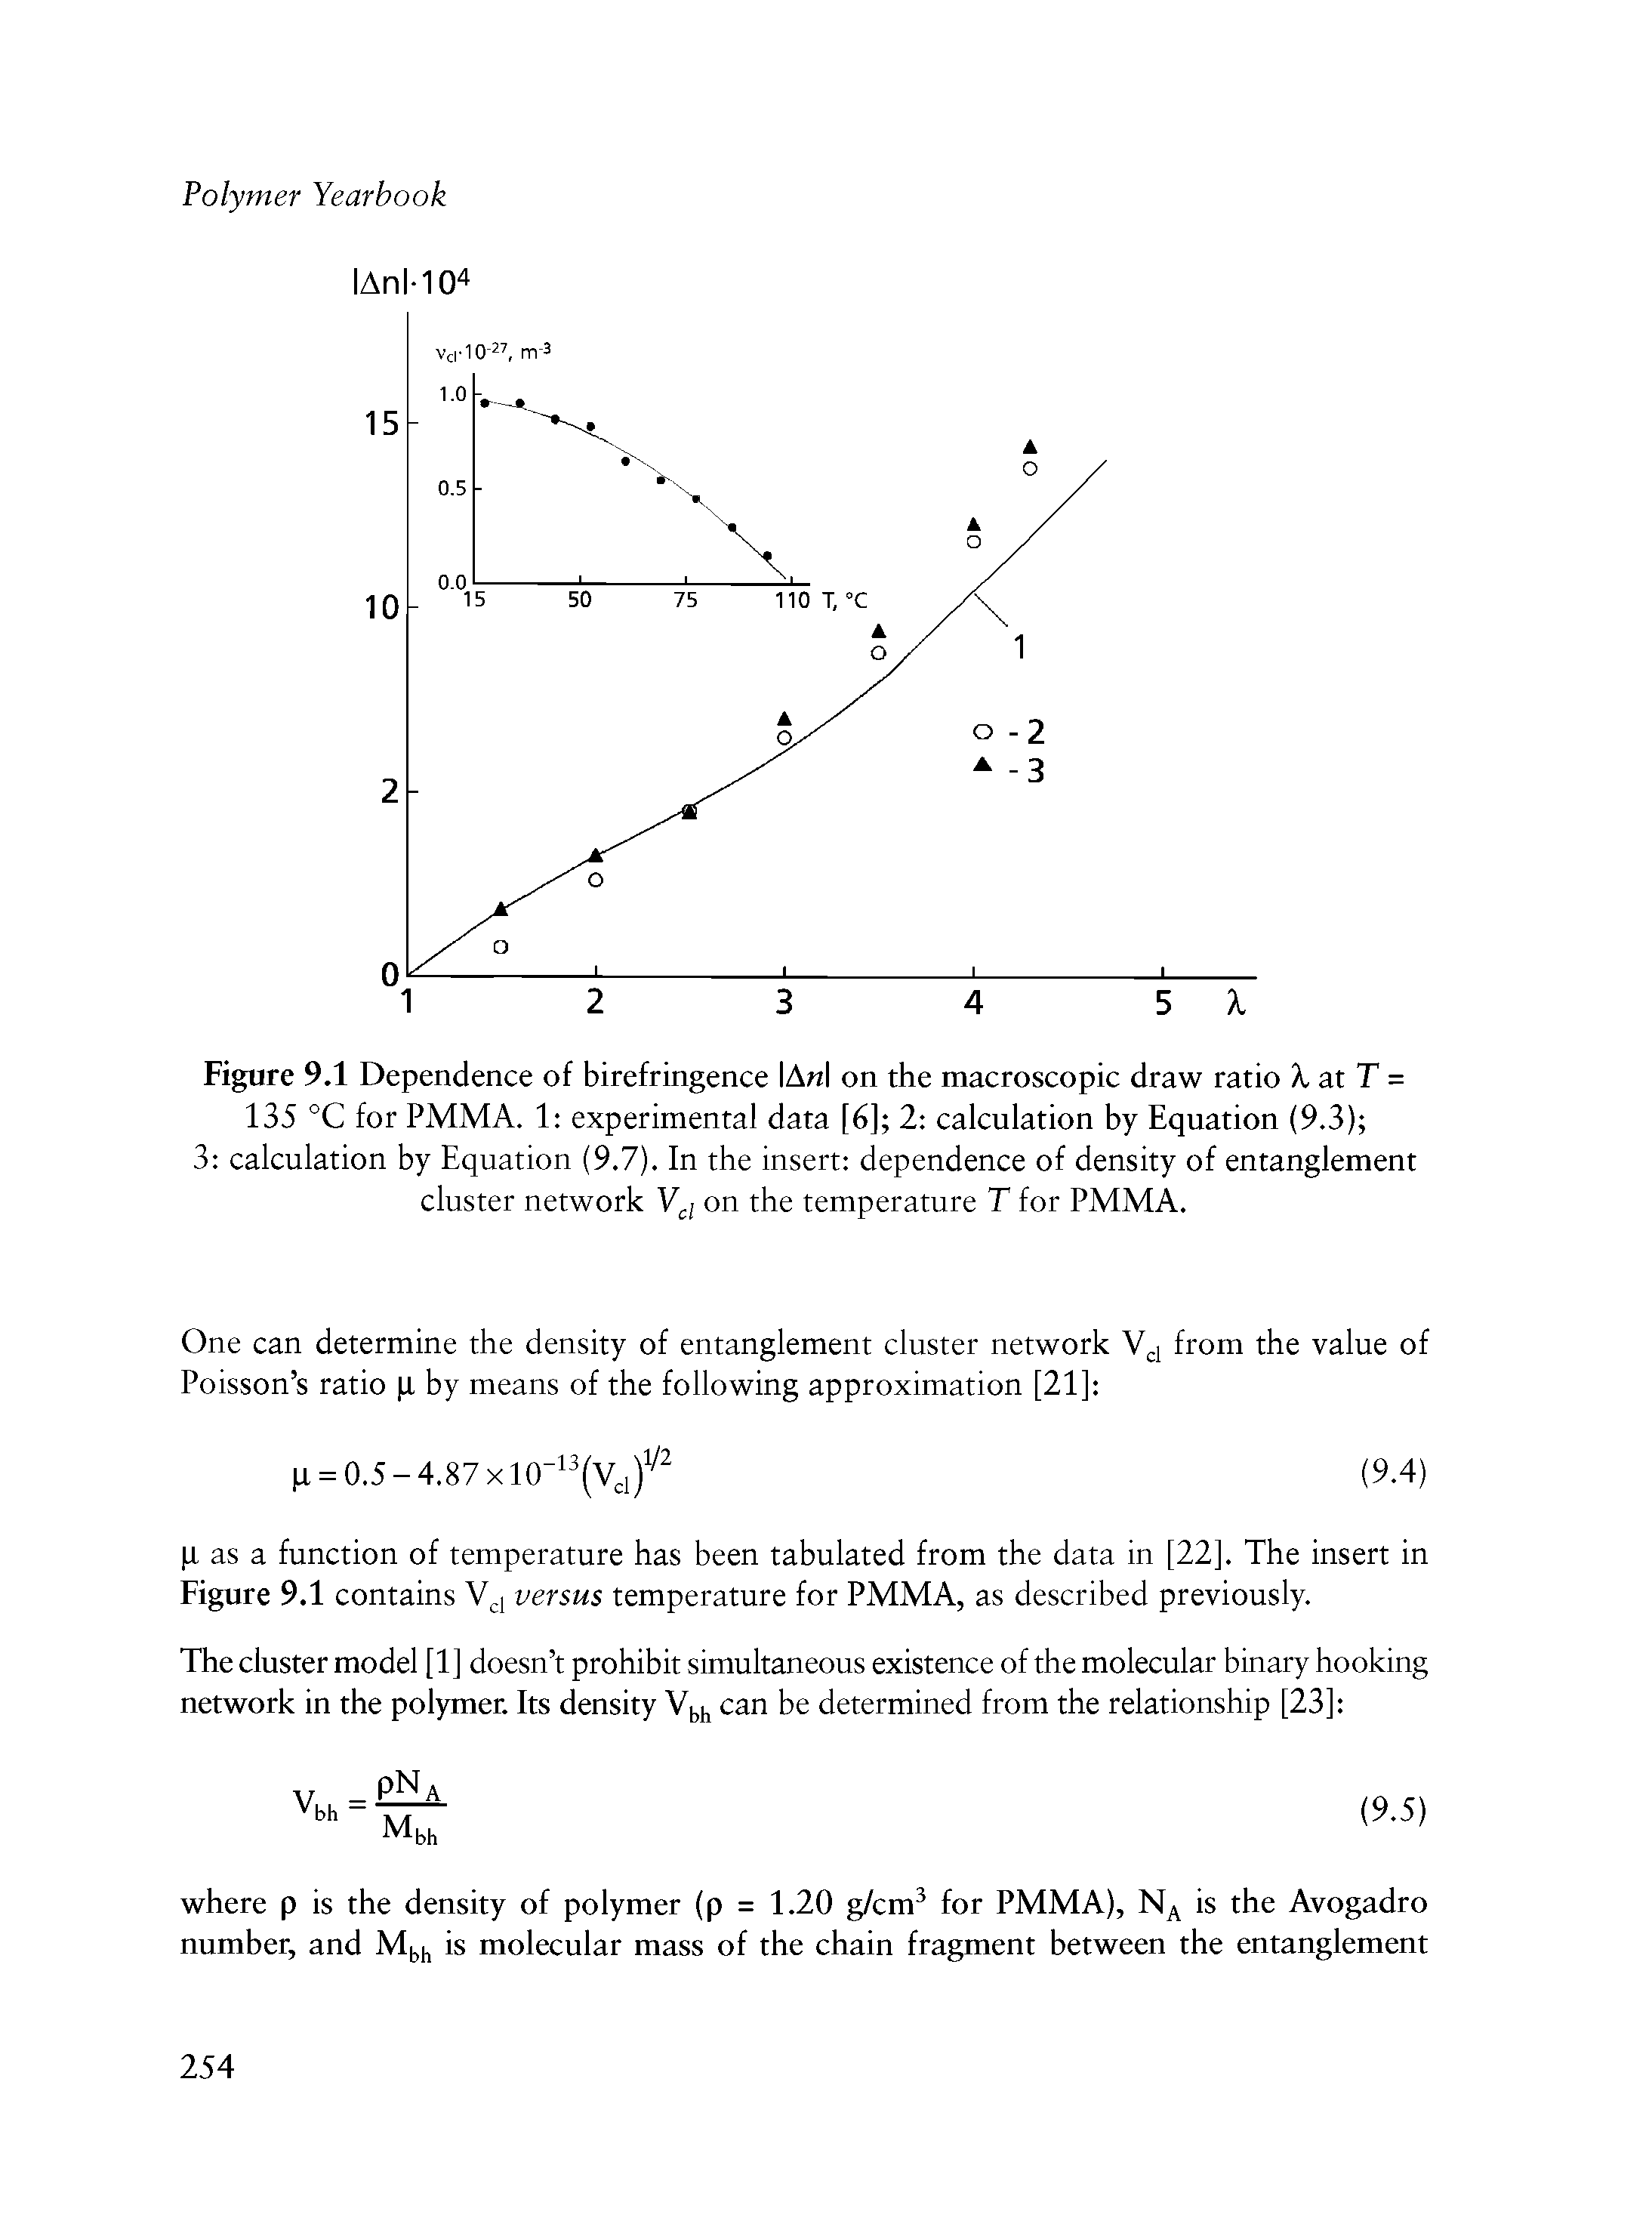 Figure 9.1 Dependence of birefringence lAnI on the macroscopic draw ratio XatT = 135 °C for PMMA. 1 experimental data [6] 2 calculation by Equation (9.3) ...